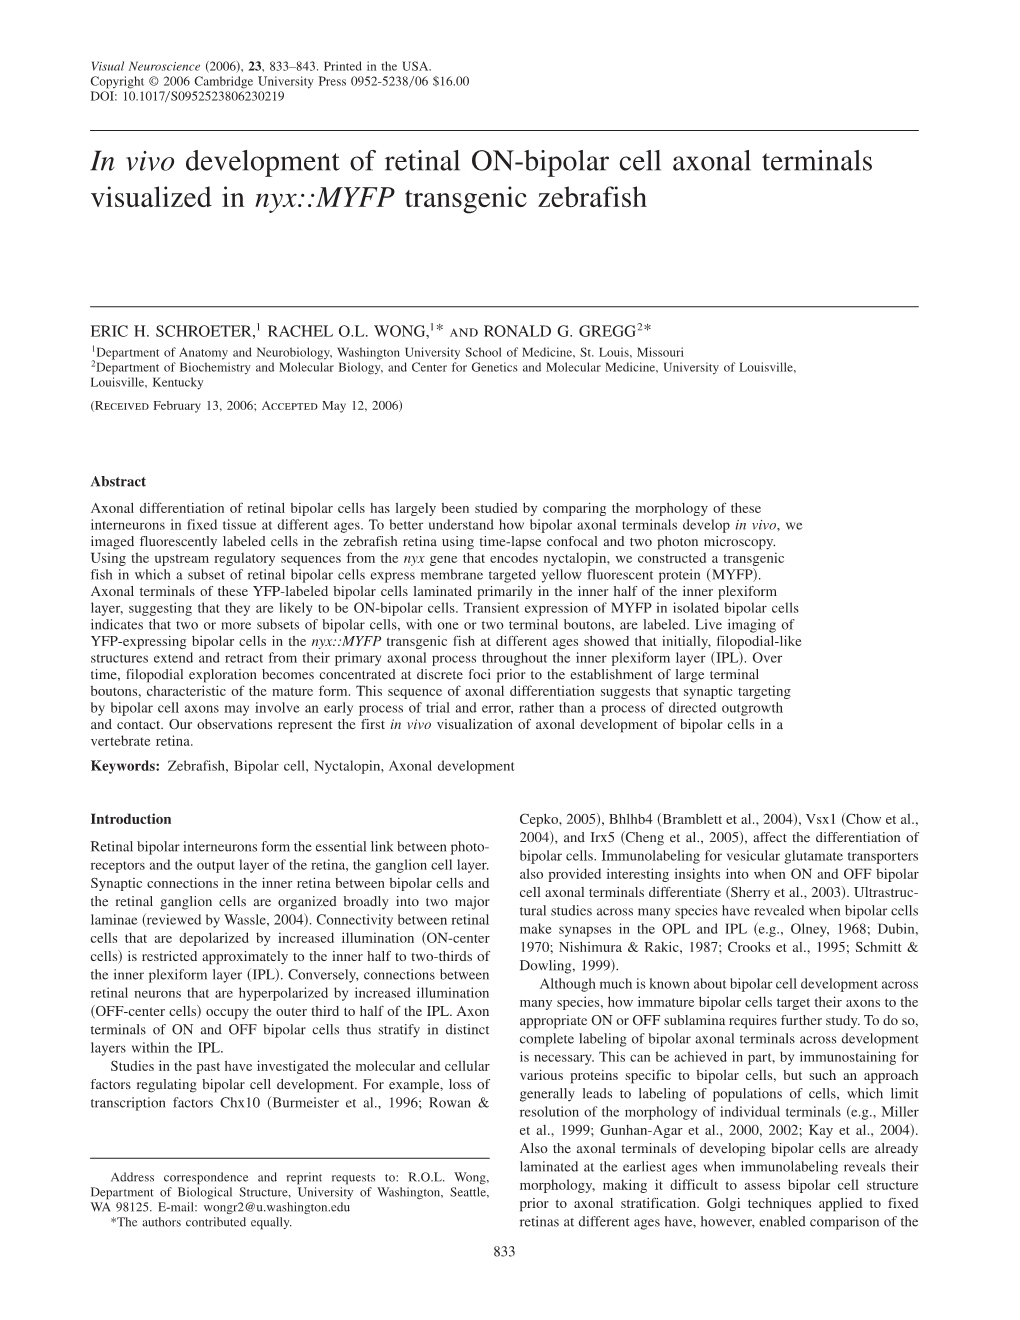 In Vivo Development of Retinal ON-Bipolar Cell Axonal Terminals Visualized in Nyx::MYFP Transgenic Zebrafish